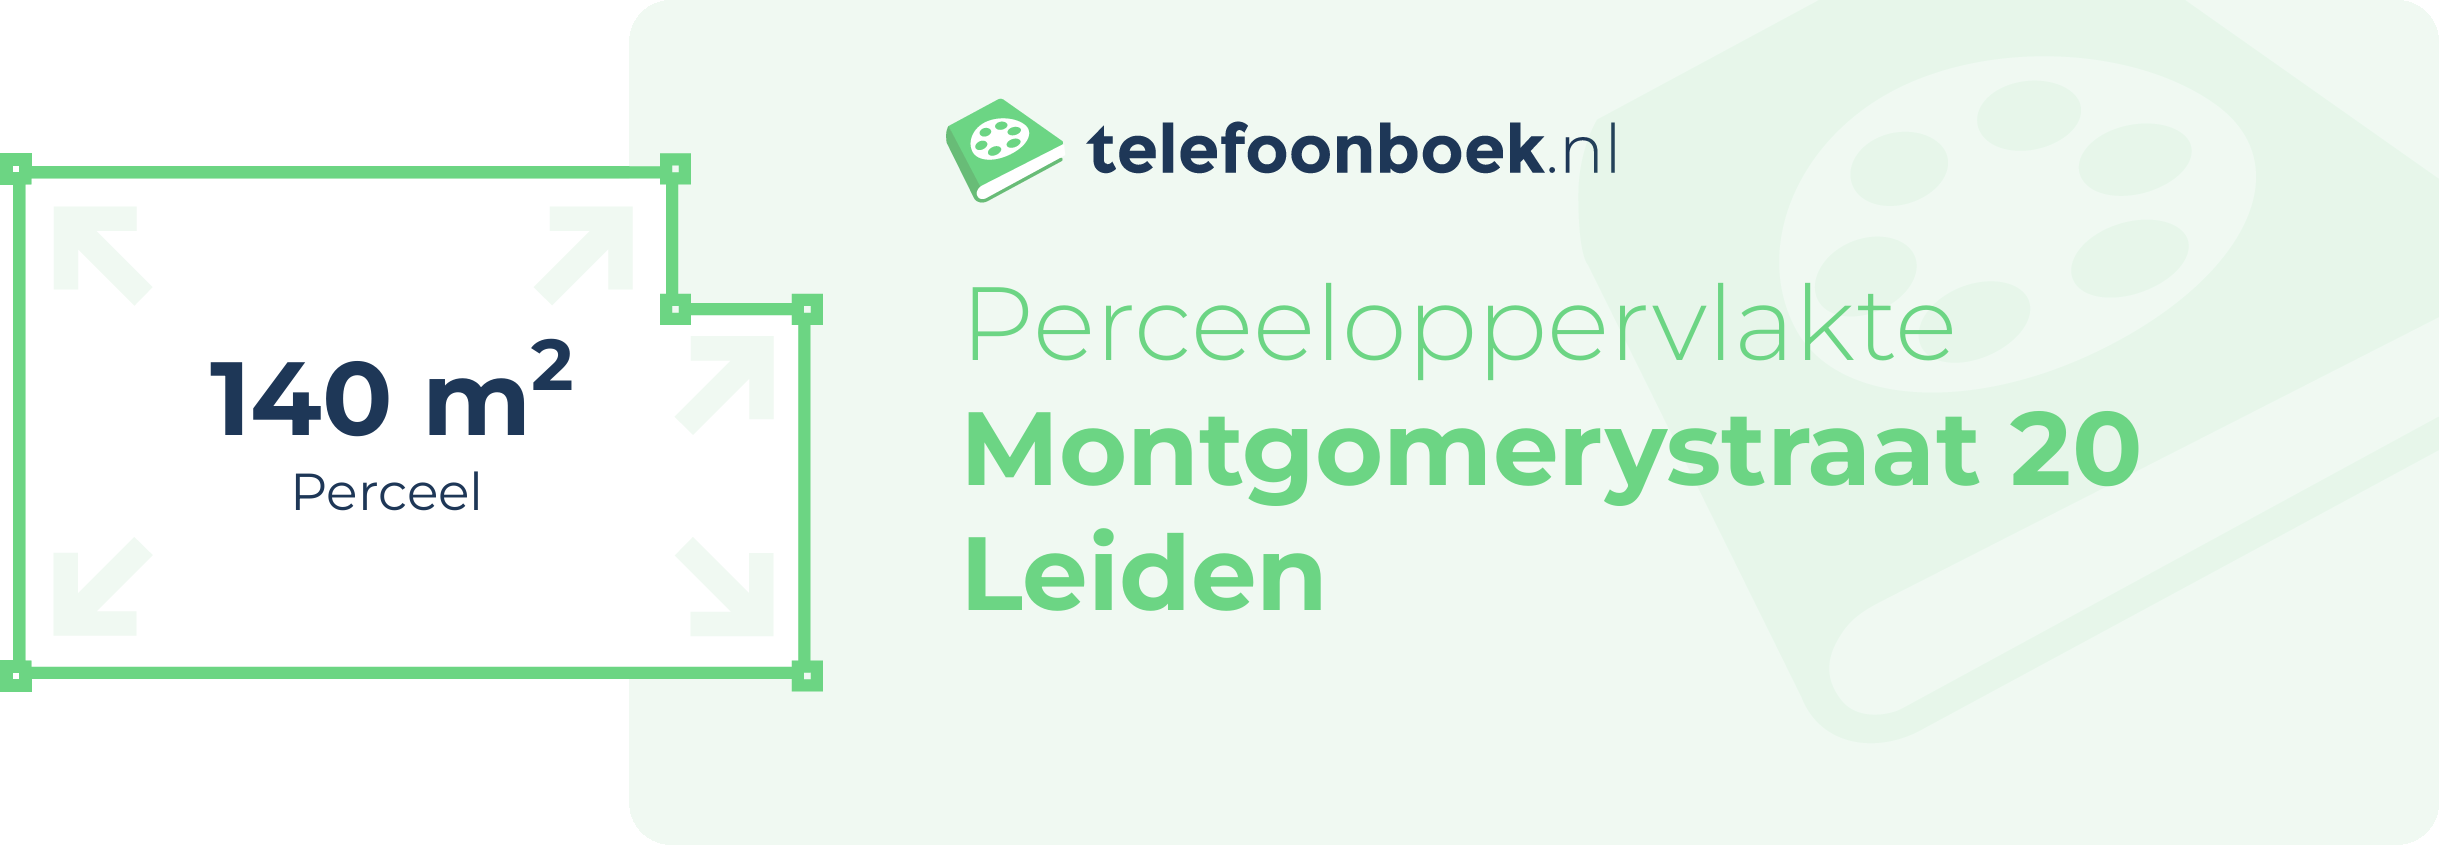 Perceeloppervlakte Montgomerystraat 20 Leiden